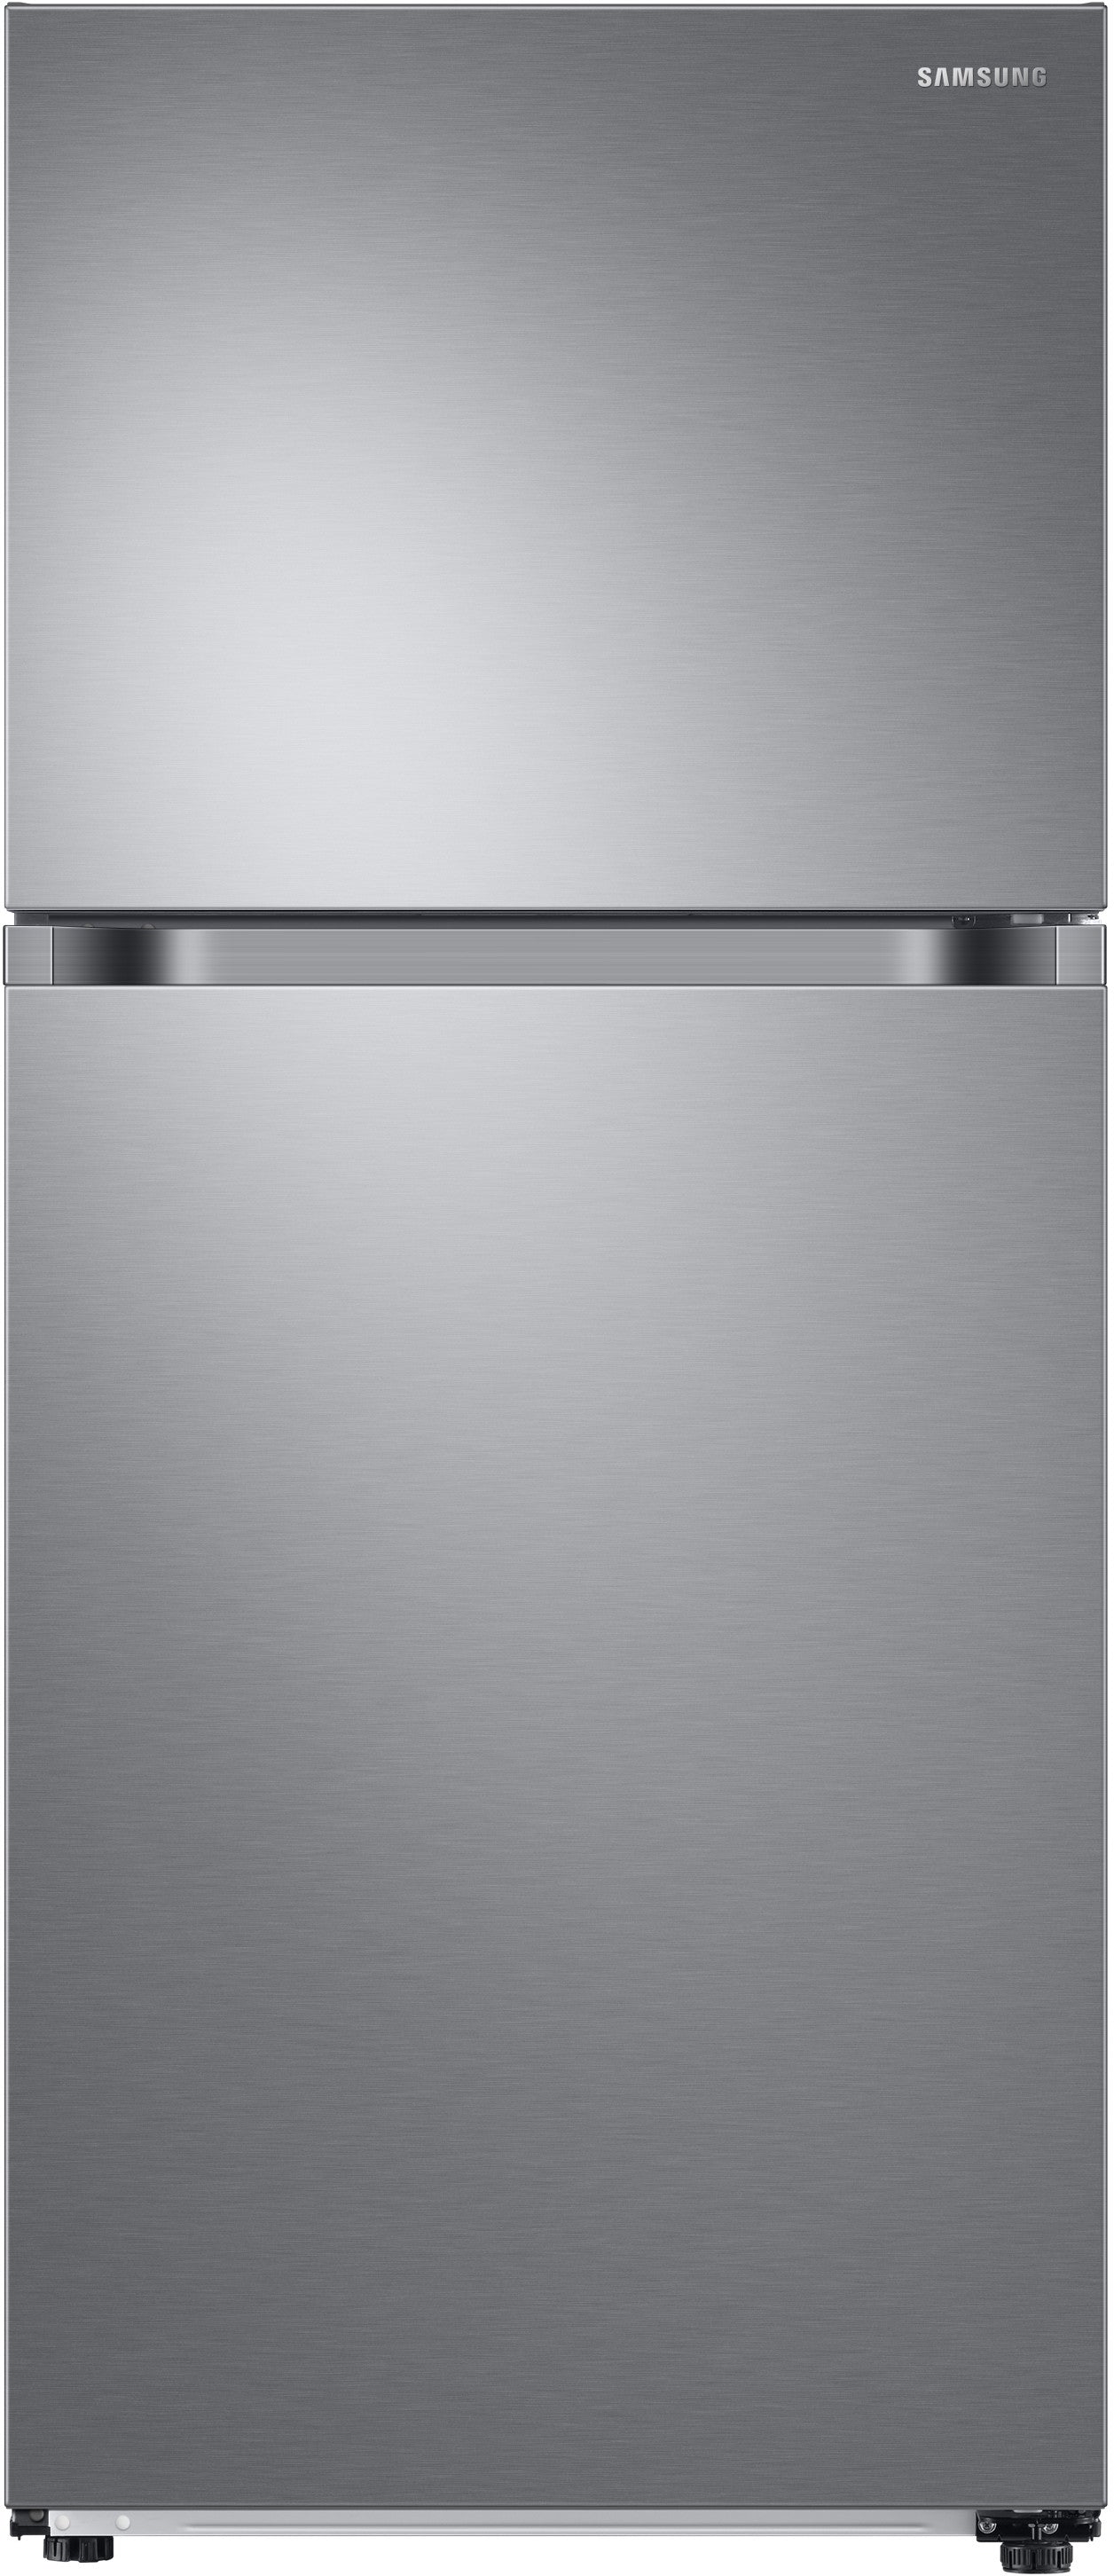 Samsung RT18M6213SR/AA 18 Cu. Ft. Top Freezer Refrigerator With Flex zone